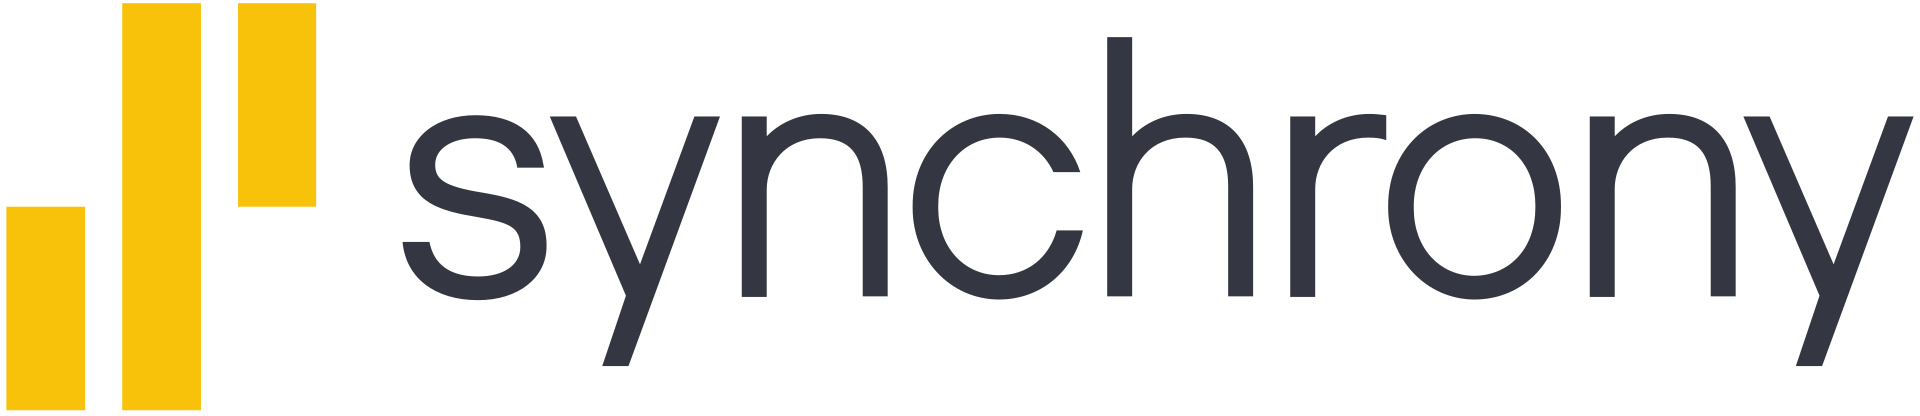 Synchrony Financial logo.svg